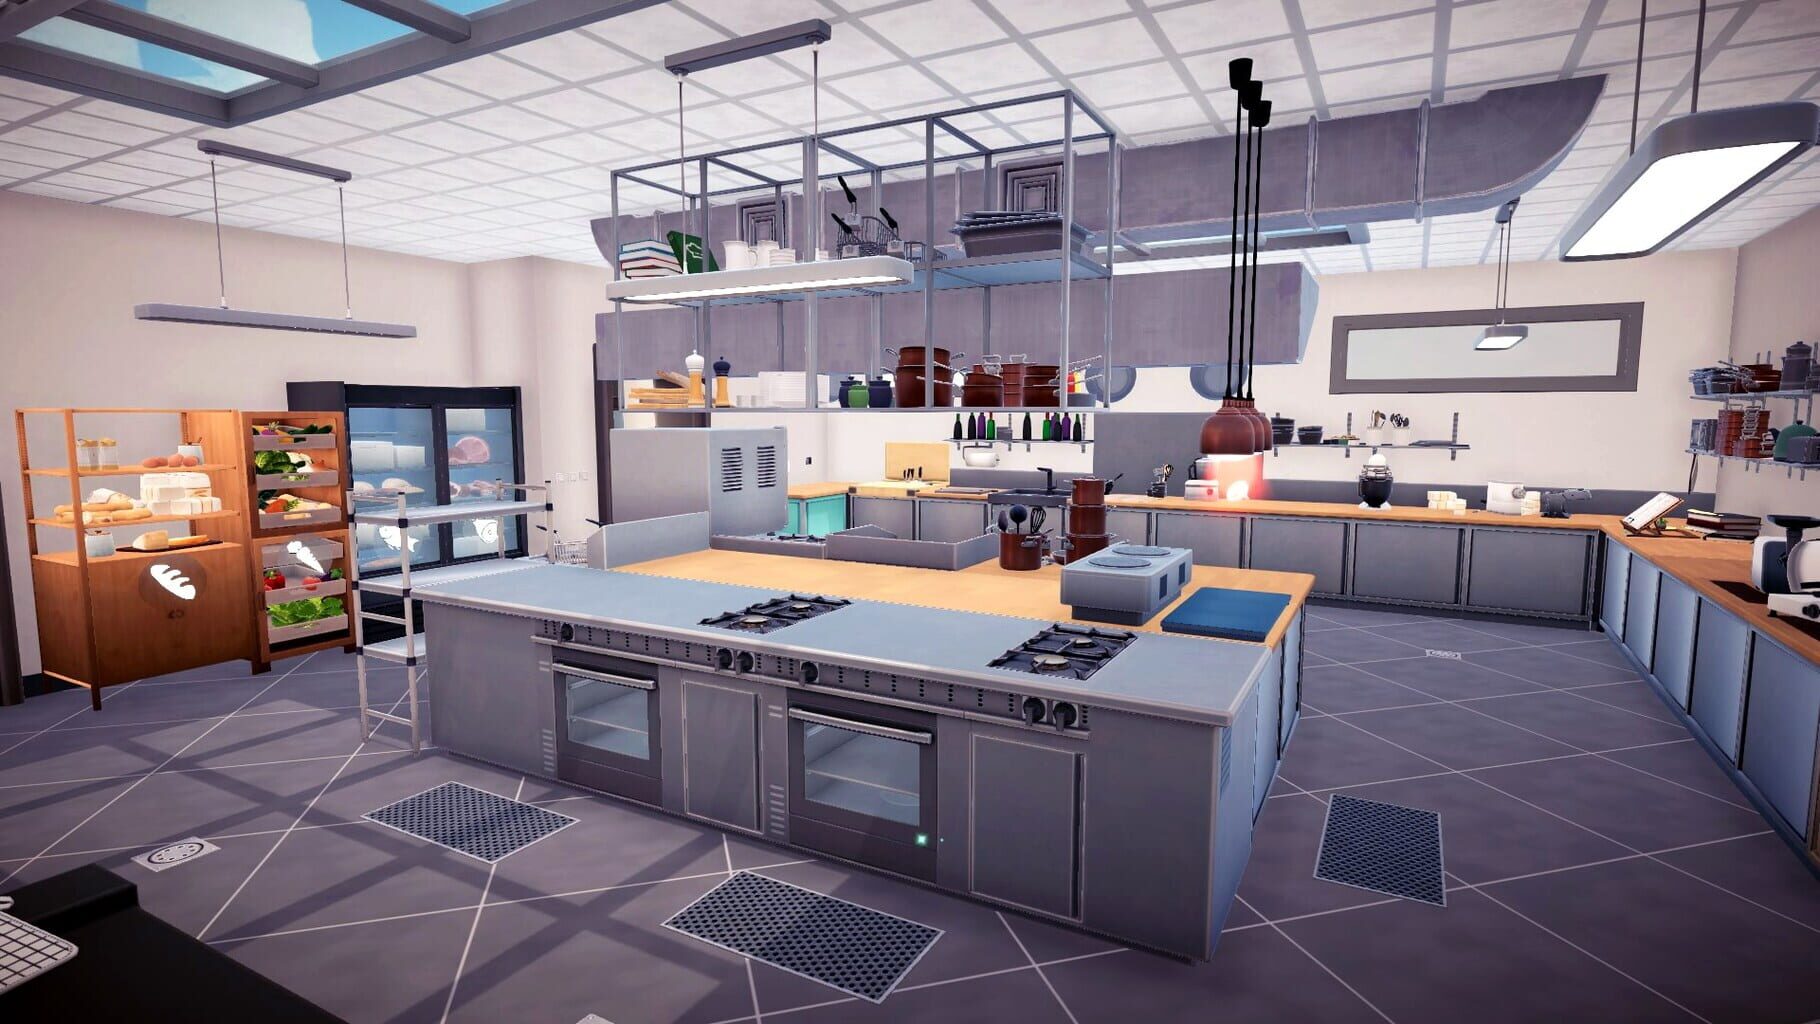 Chef Life: A Restaurant Simulator - Al Forno Edition screenshot